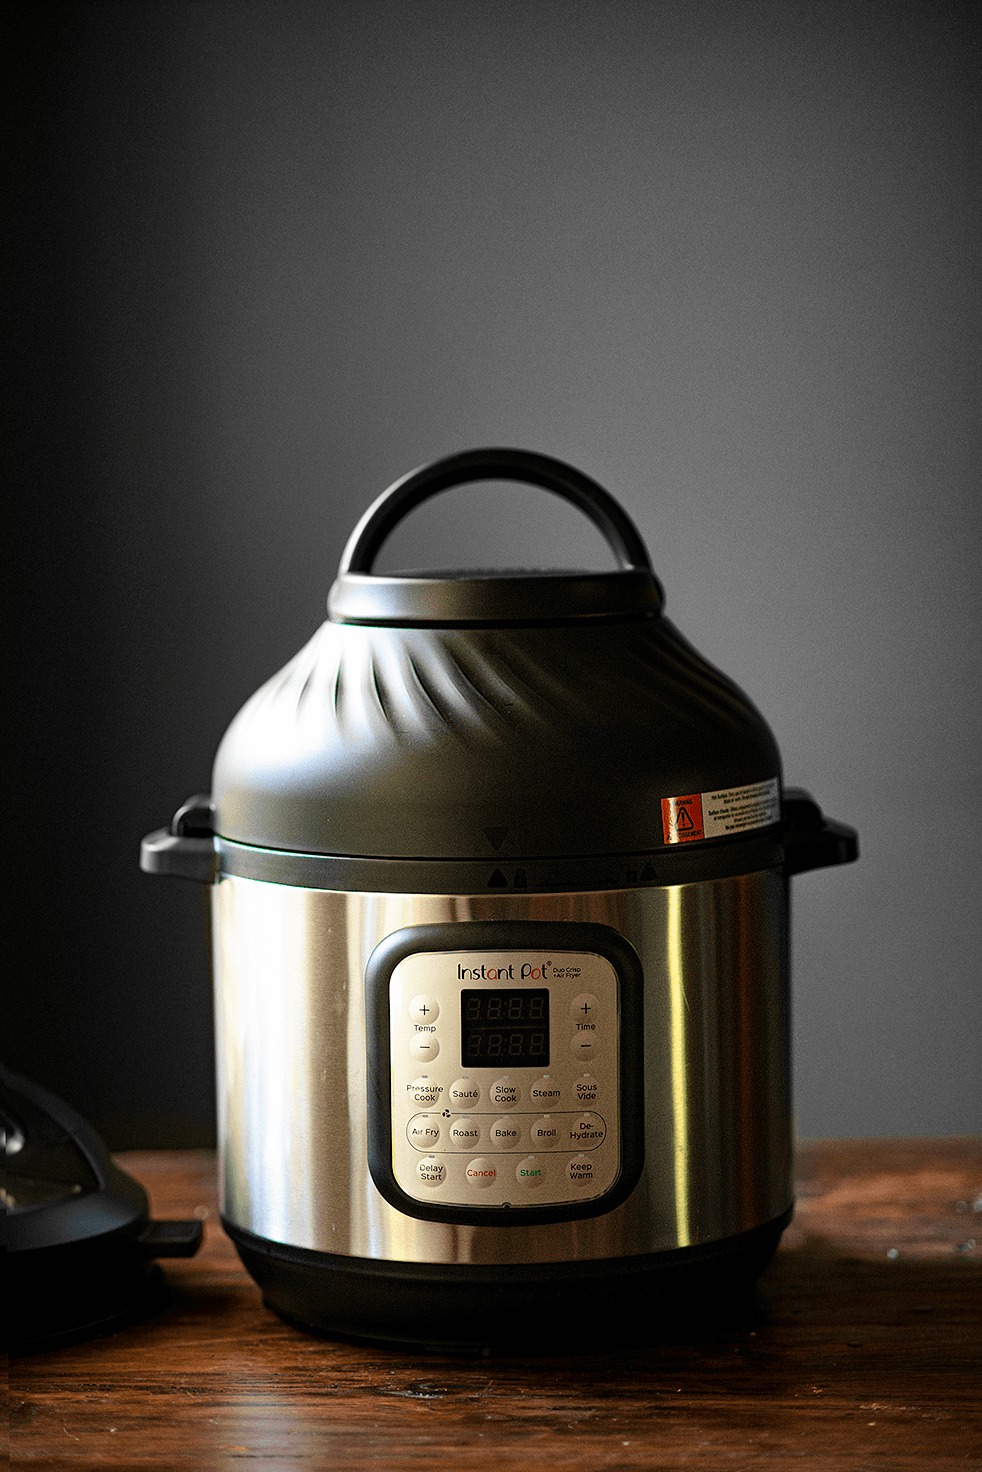 Instant Pot Duo Crisp Pressure Cooker & Airfryer Review - Pressure